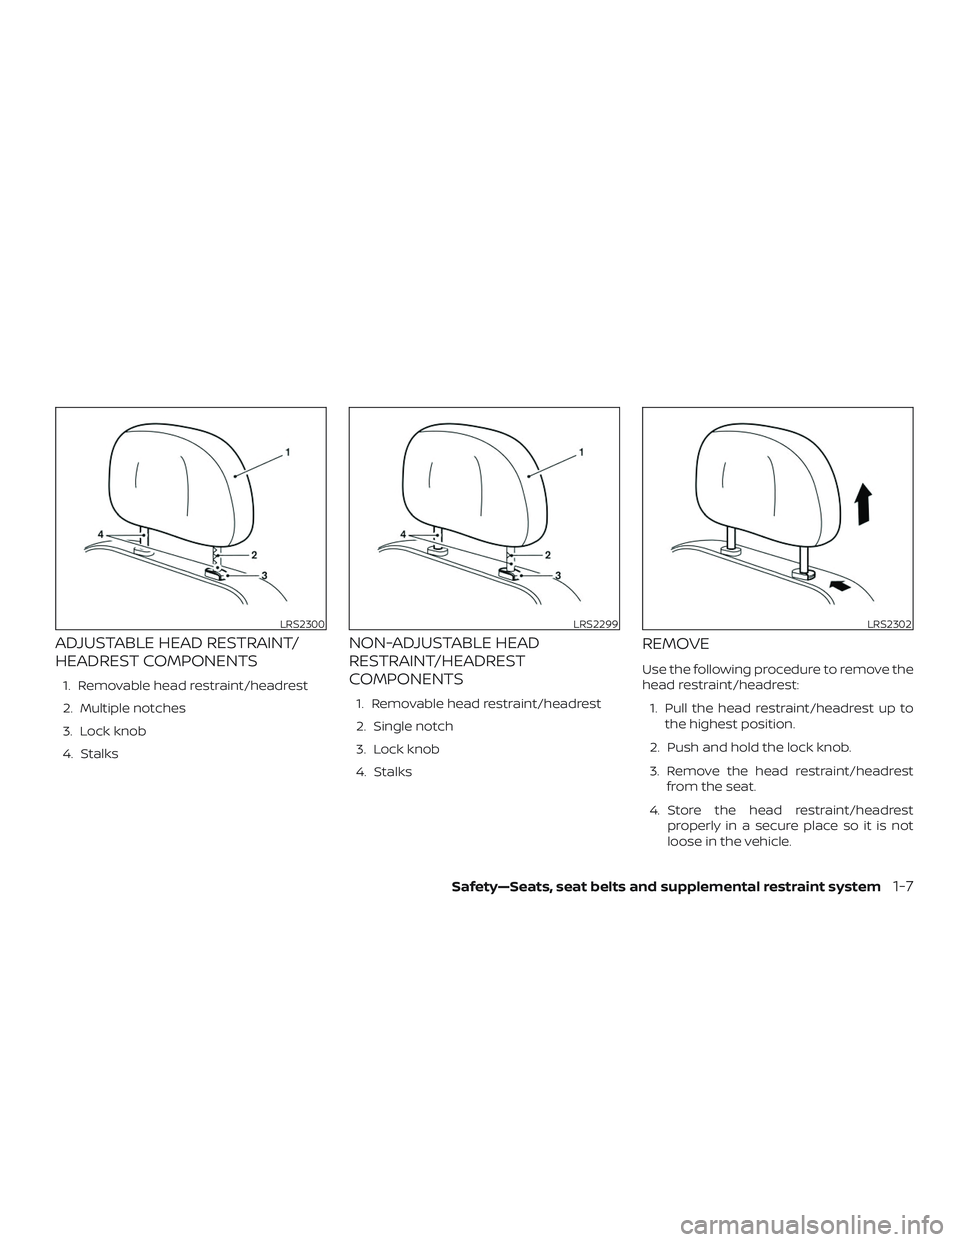 NISSAN VERSA SEDAN 2020  Owner´s Manual ADJUSTABLE HEAD RESTRAINT/
HEADREST COMPONENTS
1. Removable head restraint/headrest
2. Multiple notches
3. Lock knob
4. Stalks
NON-ADJUSTABLE HEAD
RESTRAINT/HEADREST
COMPONENTS
1. Removable head restr